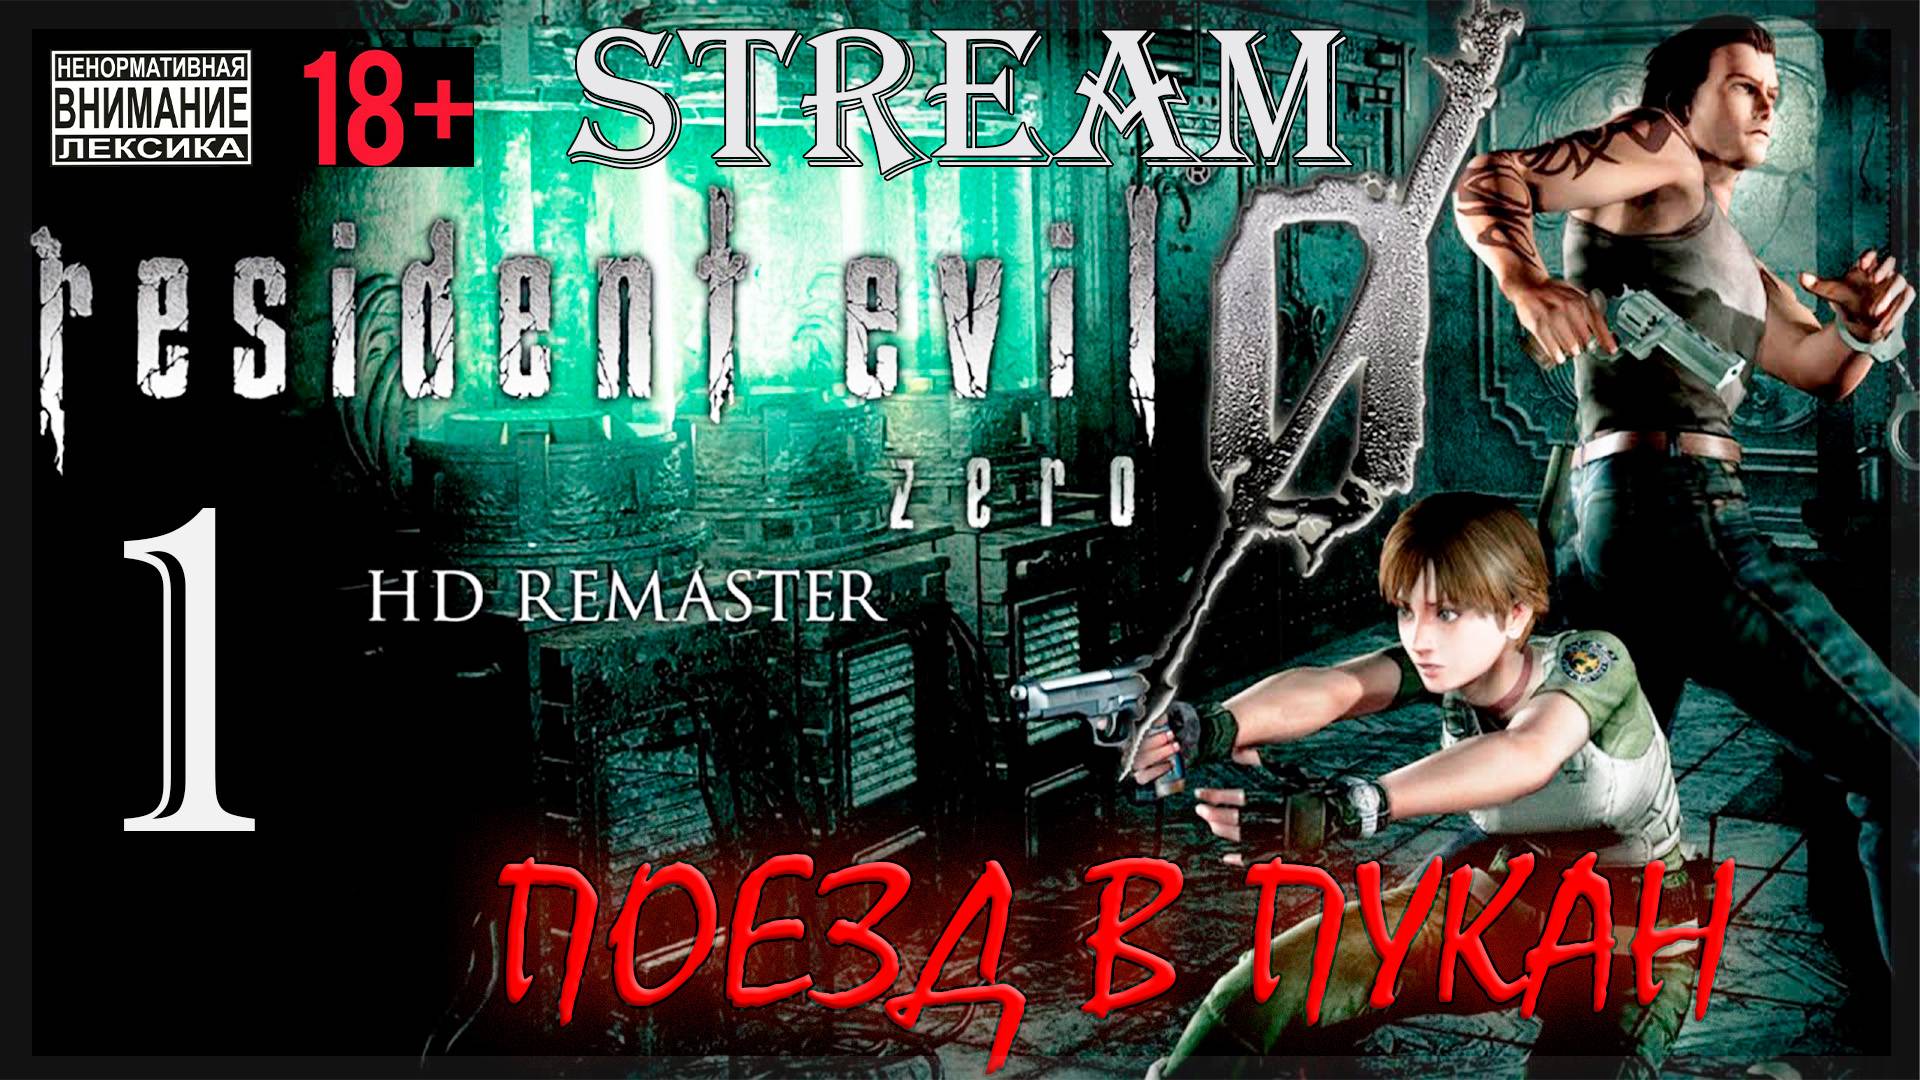 Stream - Resident Evil Zero HD REMASTER #1 Поезд в пукан